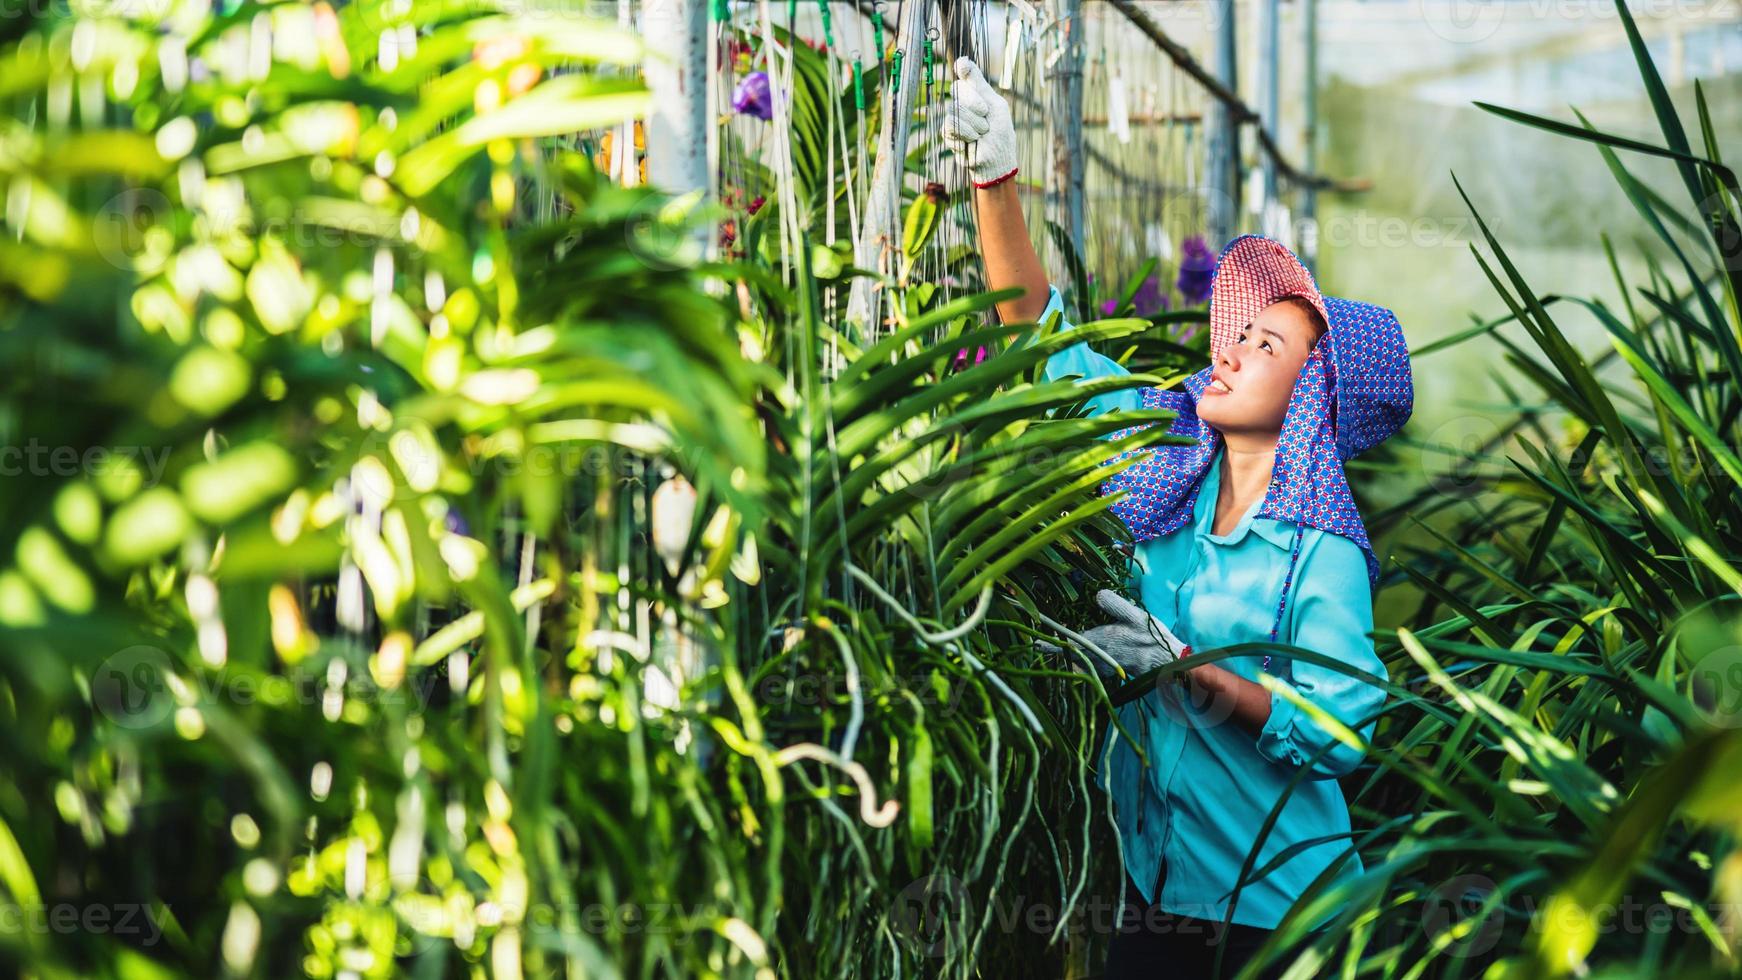 den unga kvinnan arbetaren tar hand om orkidéblomman i trädgården. jordbruk, orkidéodling. foto